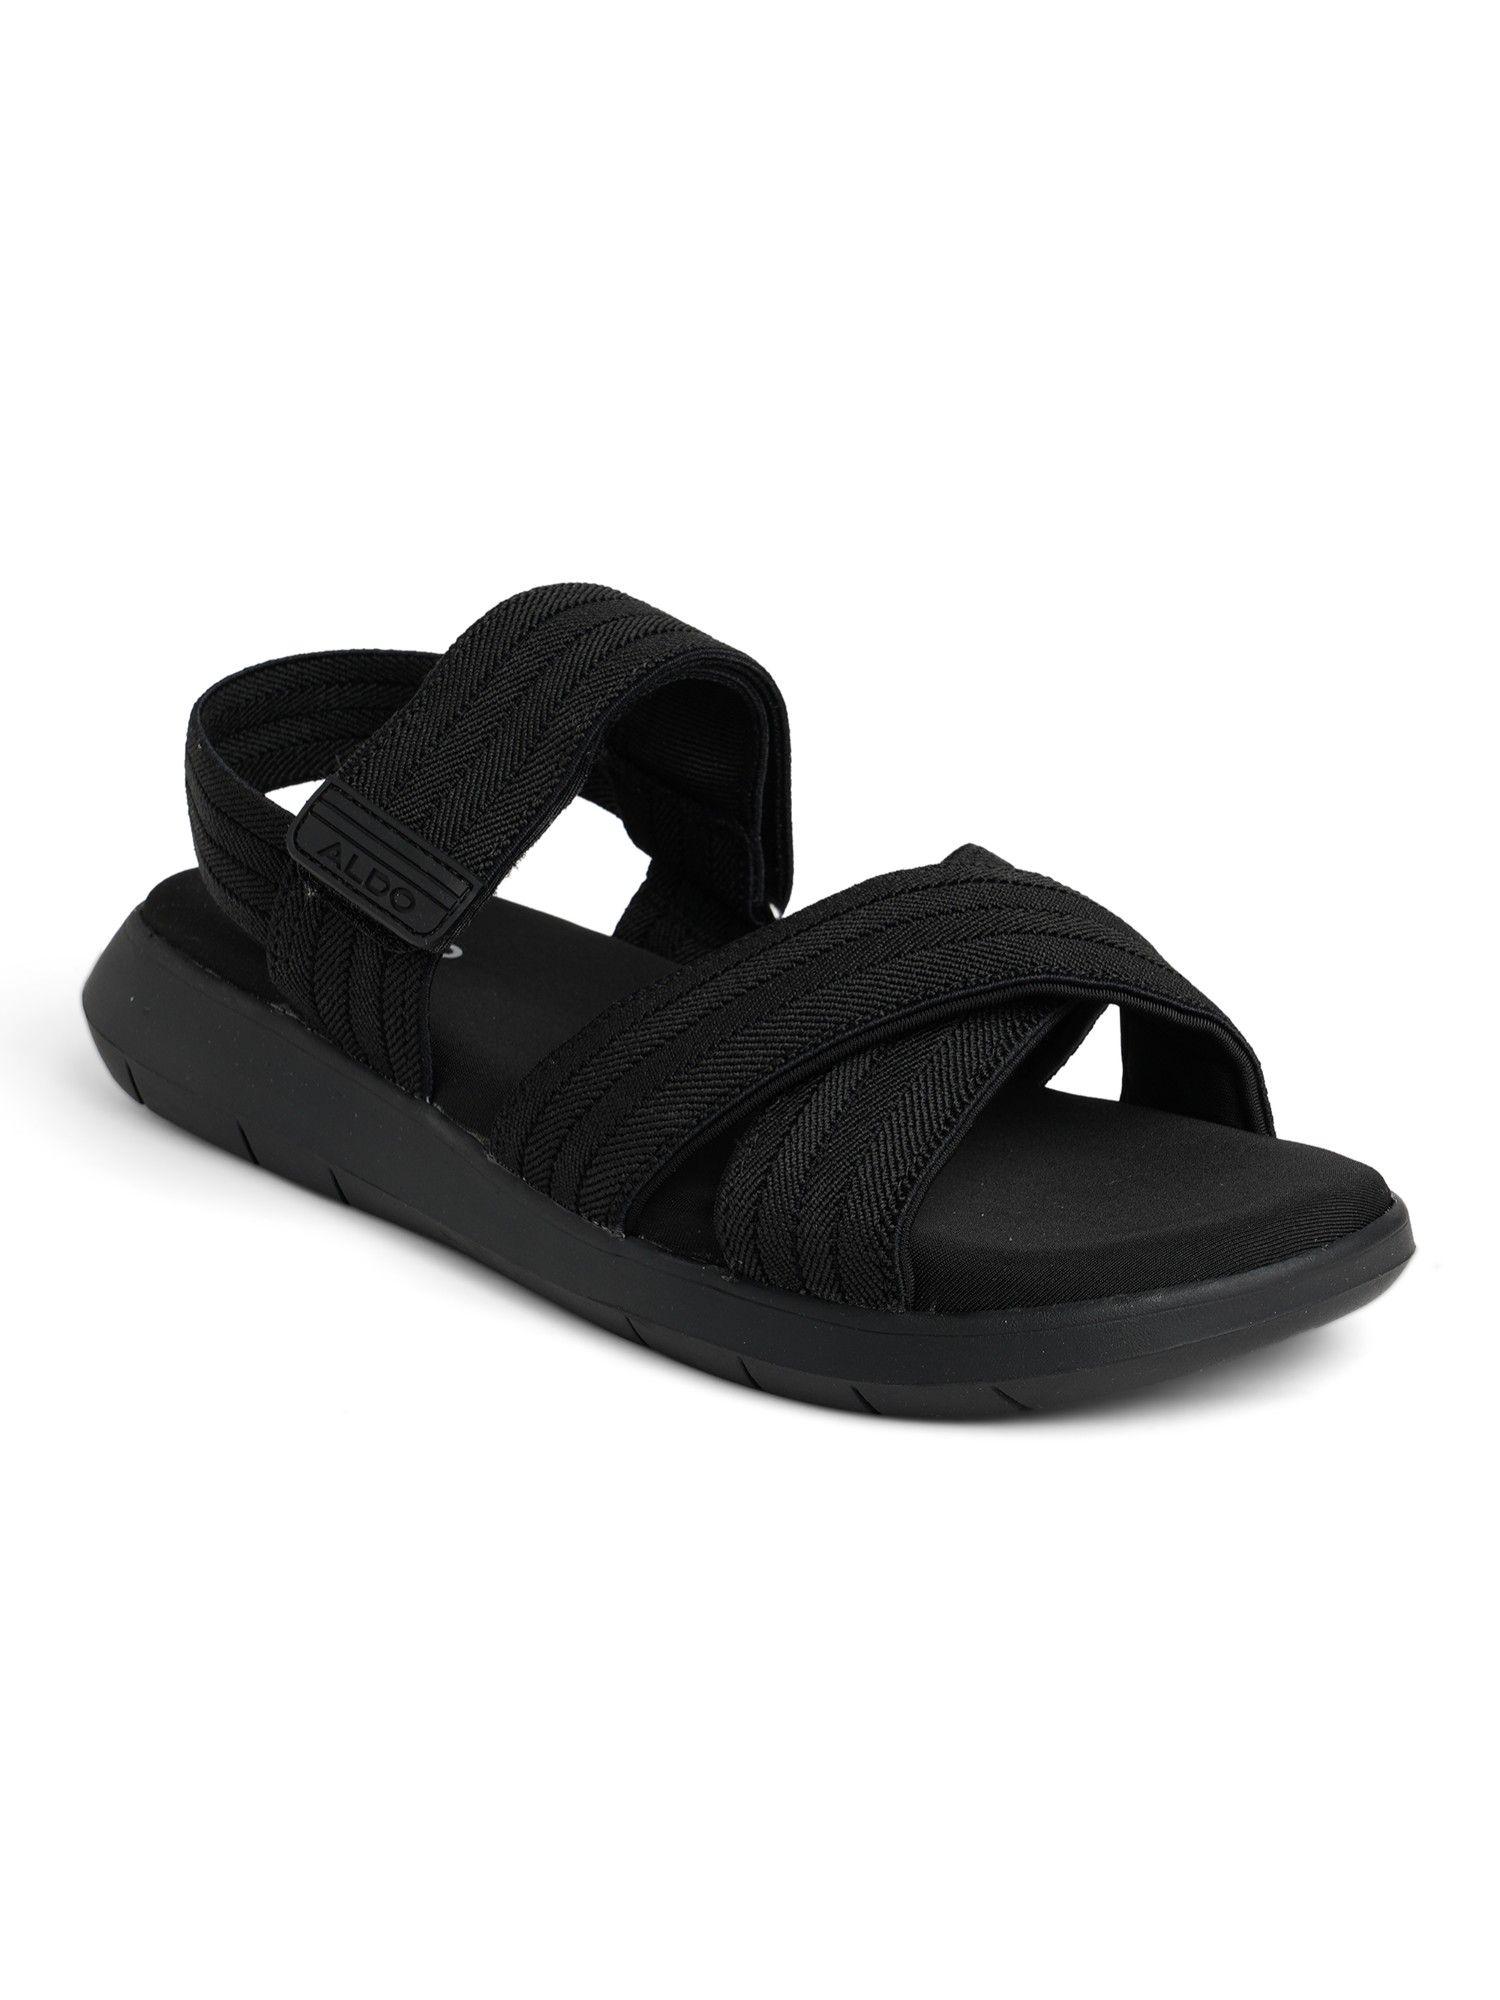 men strap sandals black sandals